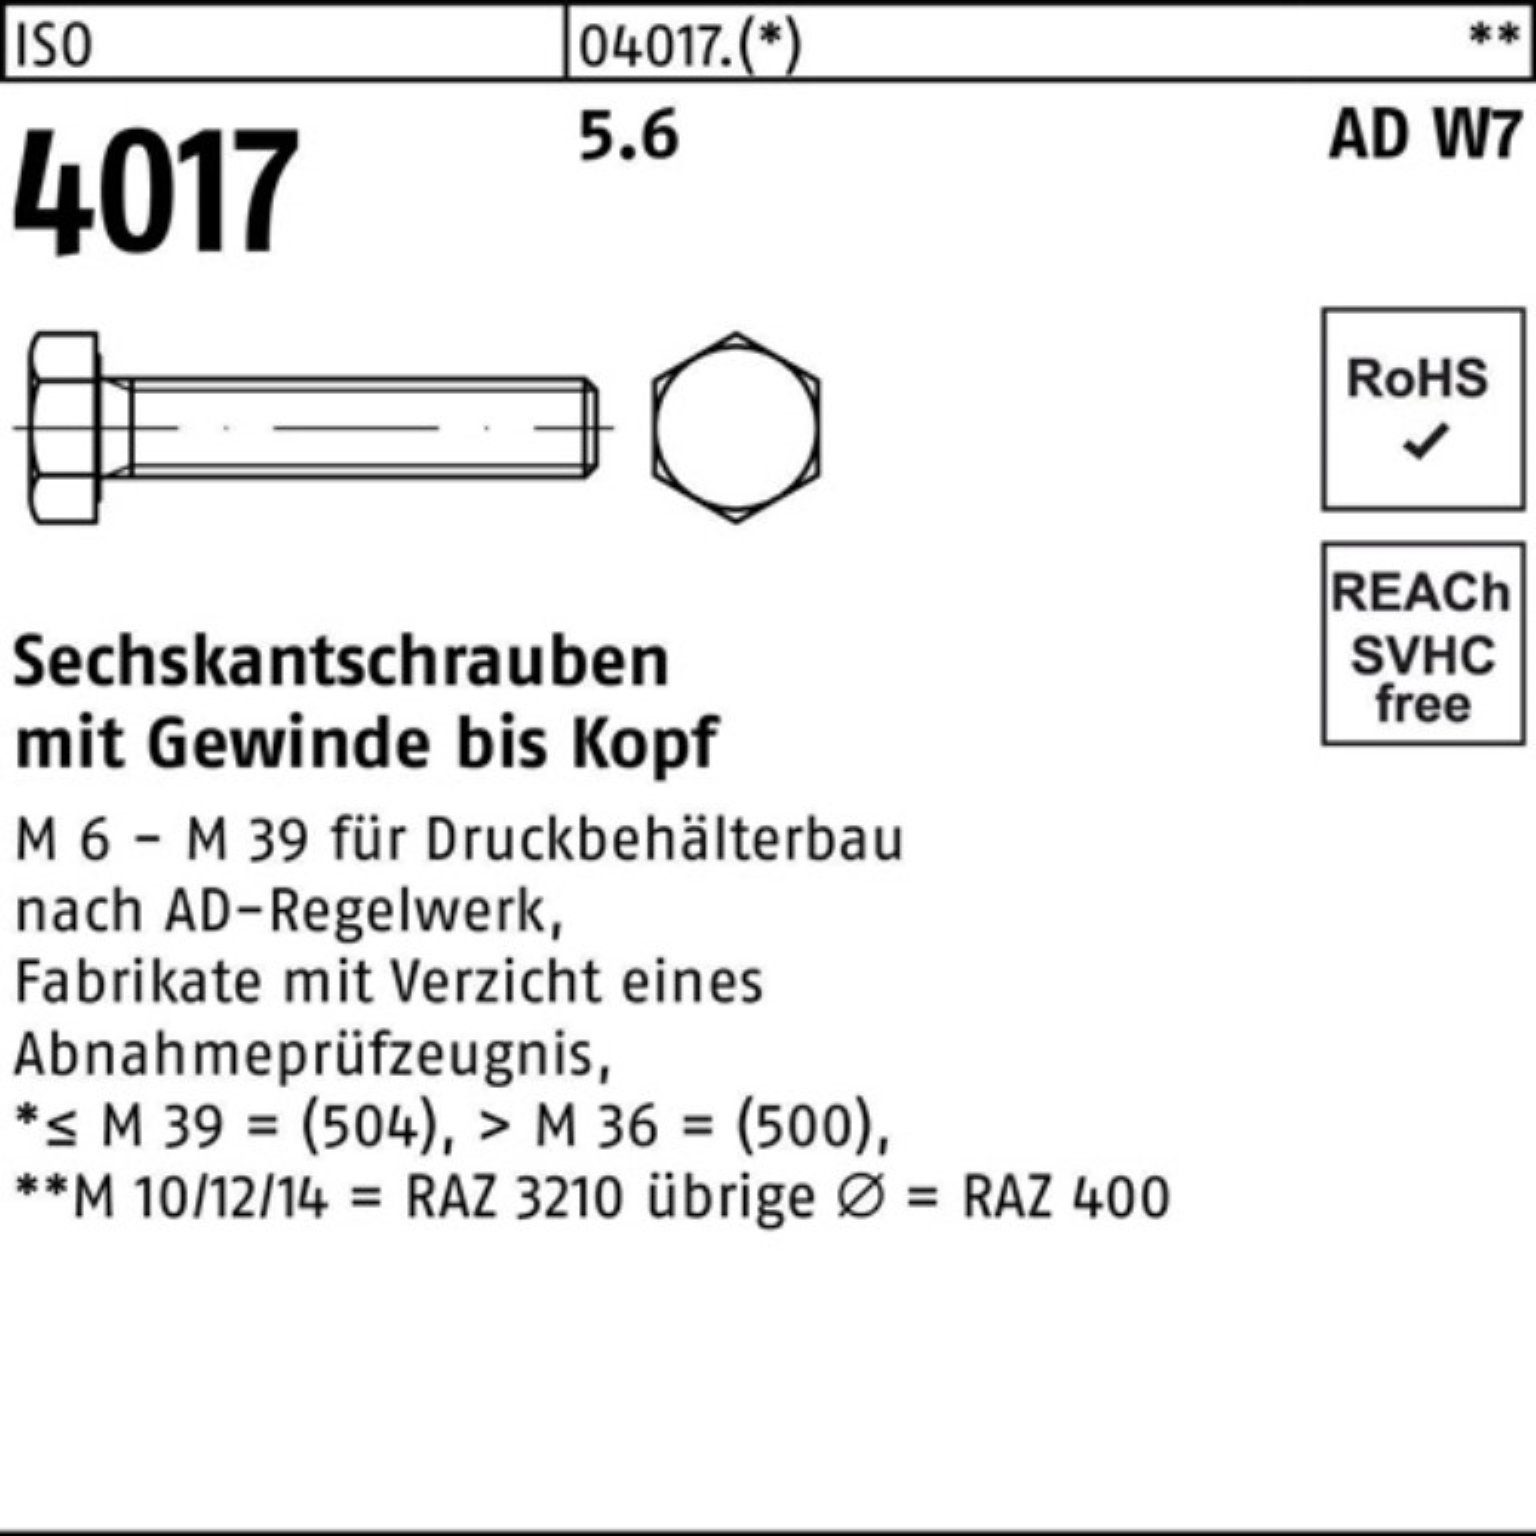 50 Sechskantschraube 100er 5.6 VG 25 ISO StückIS Sechskantschraube 4017 W7 Pack Bufab AD M22x